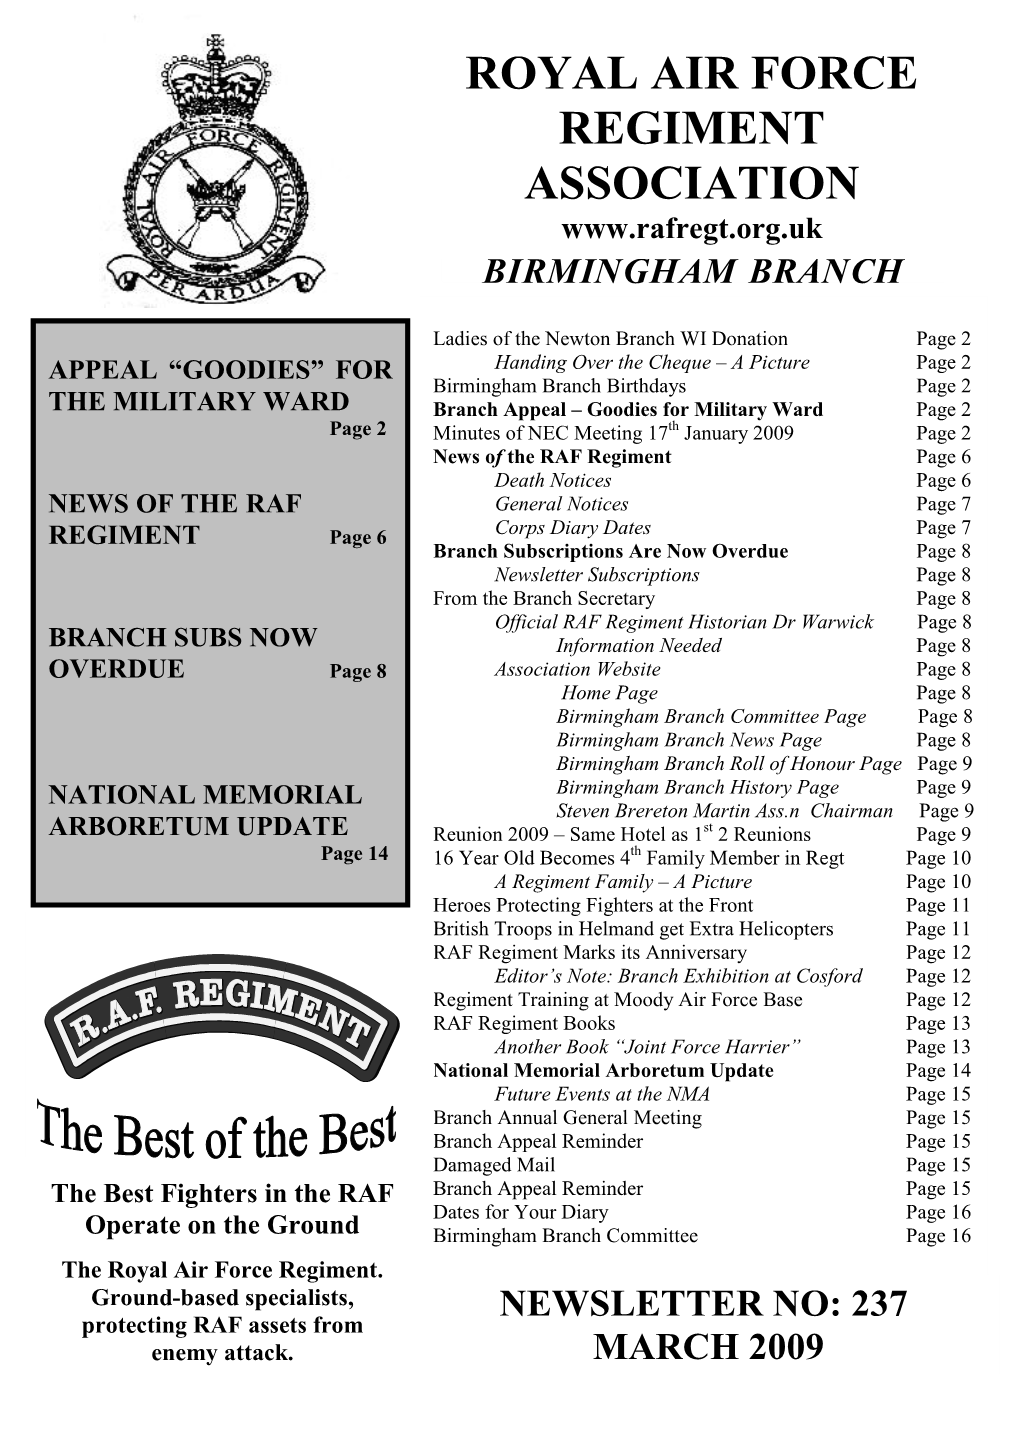 RAF Regiment Books